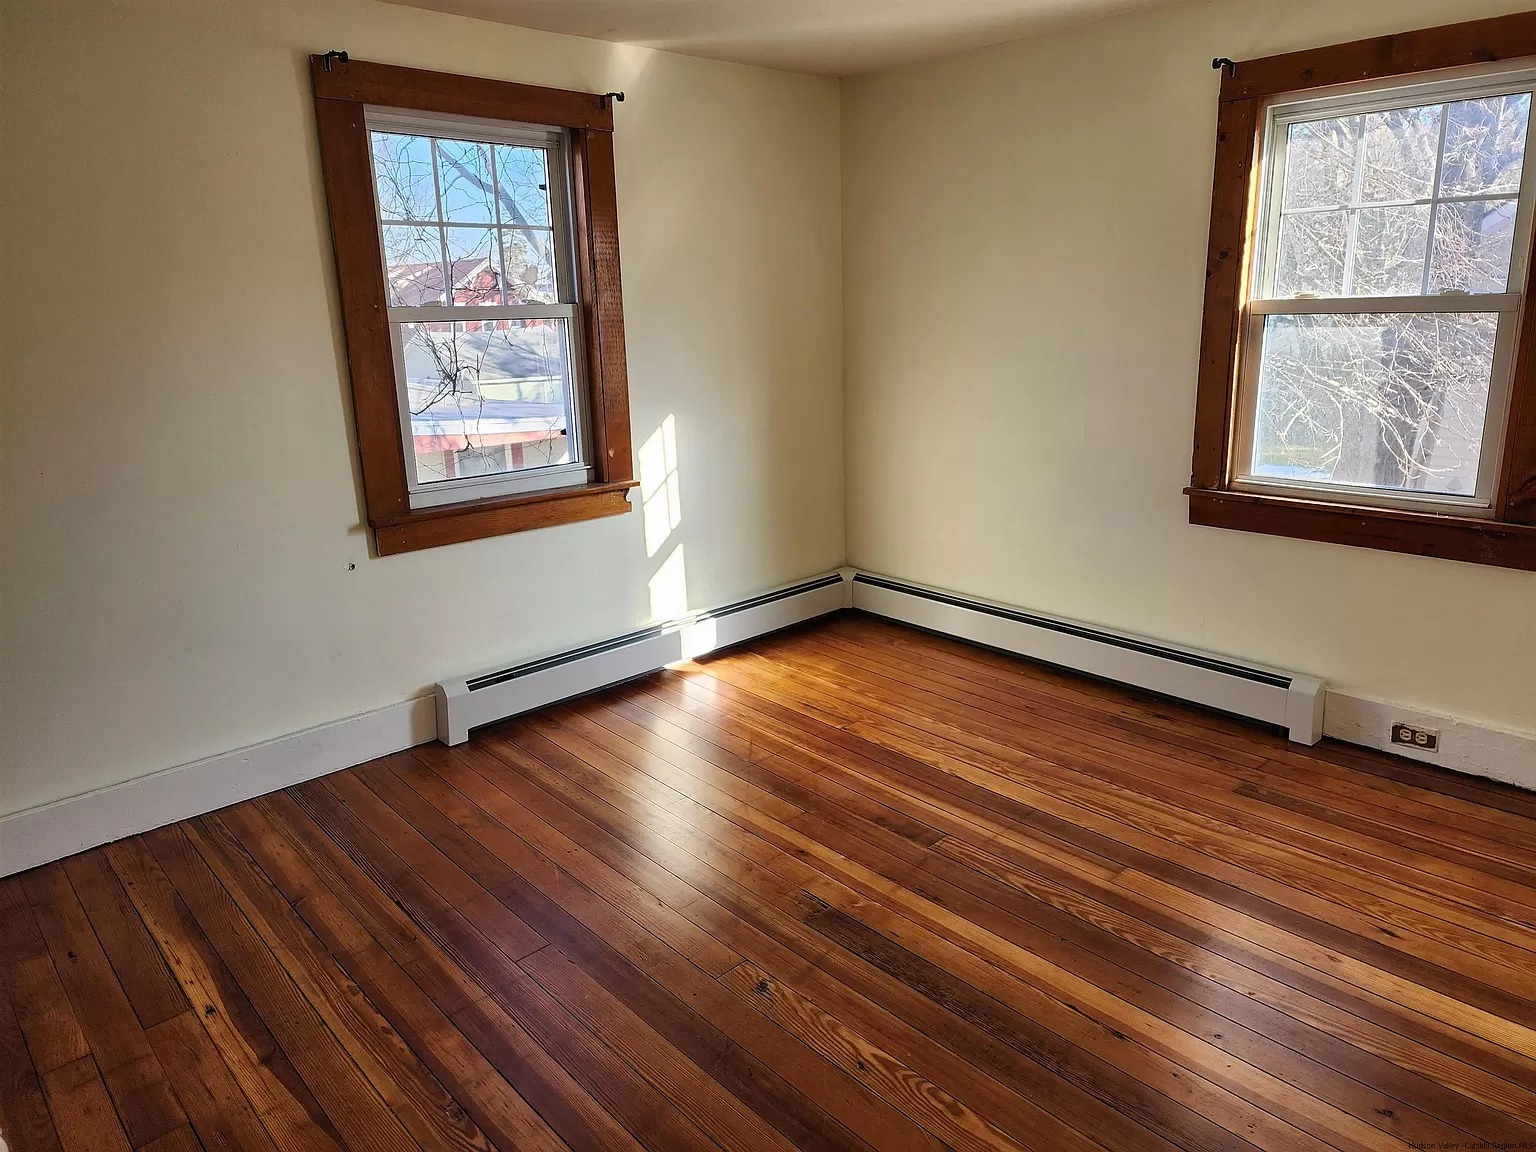 Polished wood flooring and matching window trim